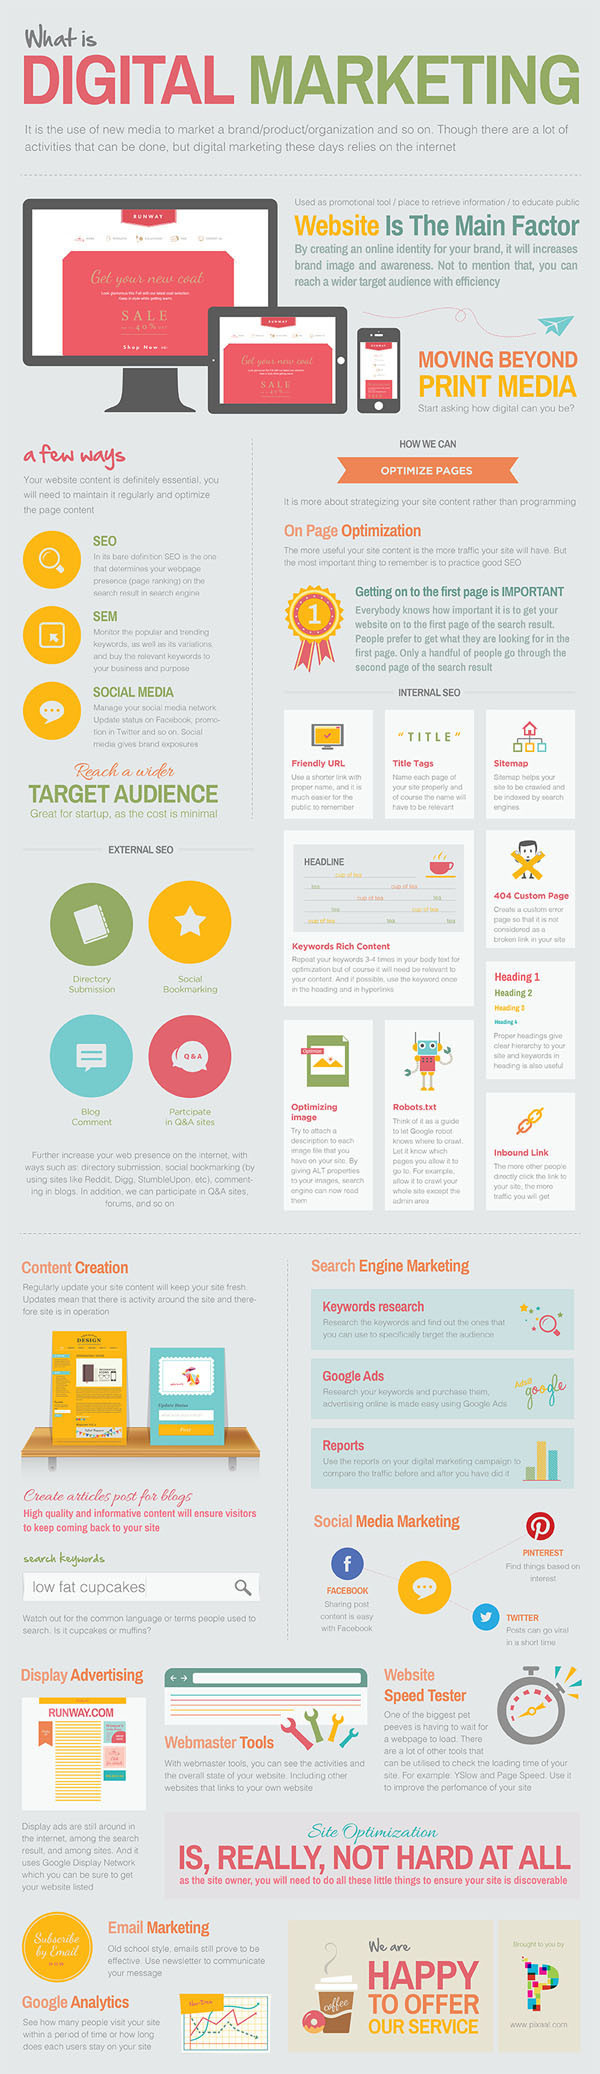 Infographic design idea #178: What is Digital Marketing ? [Infographic] #infographic